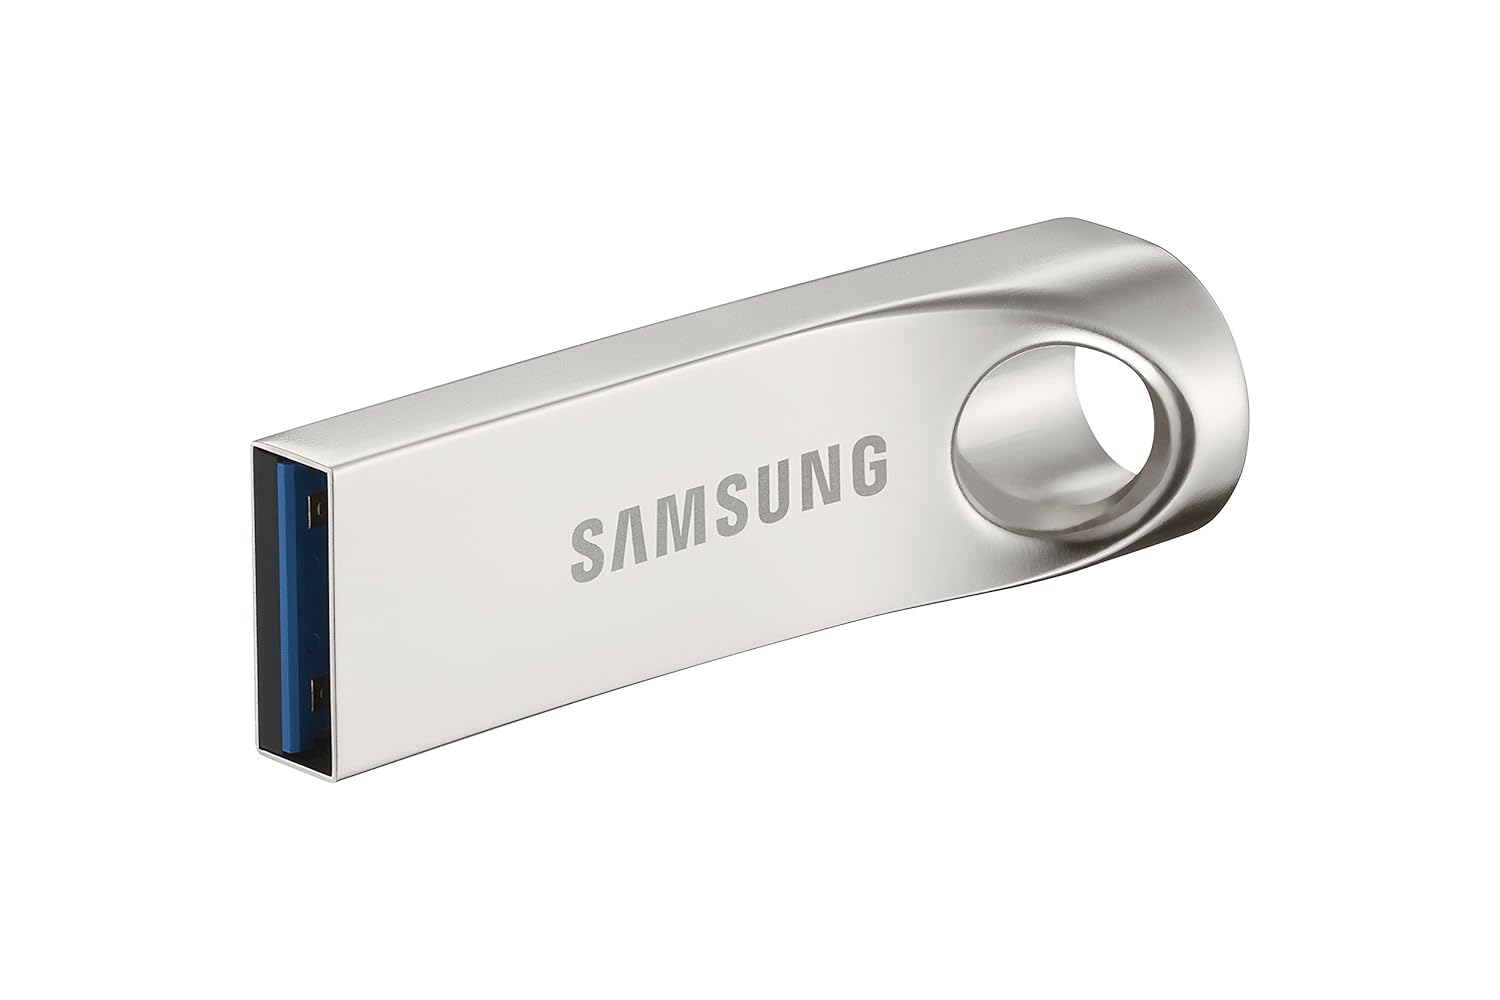 USB drive with a capacity bar